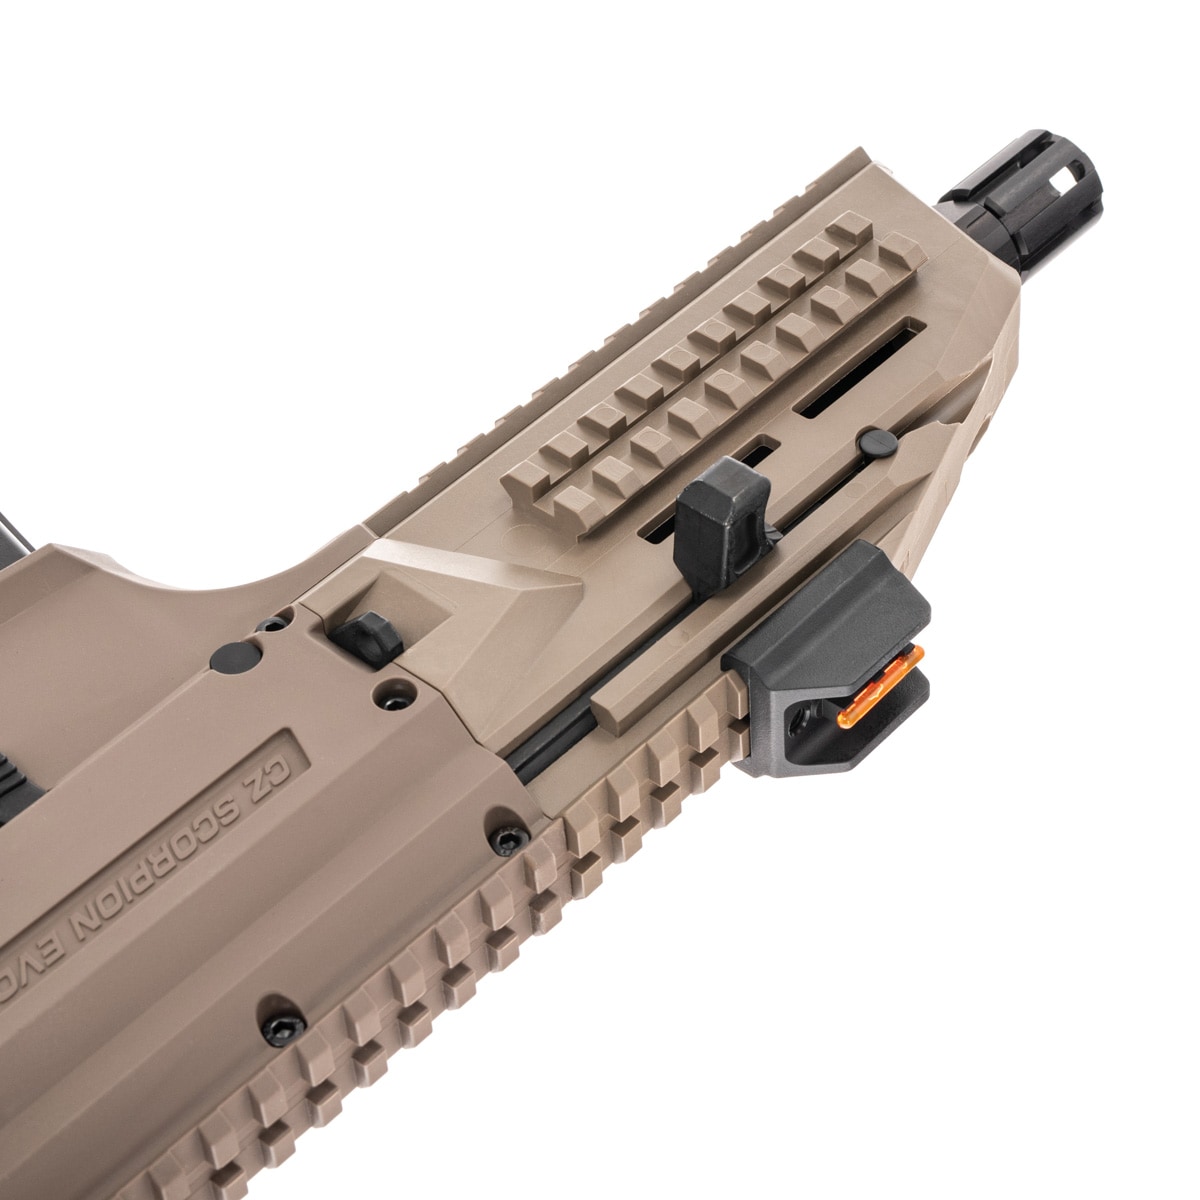 Pistolet maszynowy AEG CZ Scorpion Evo 3-A1 - Flat Dark Earth